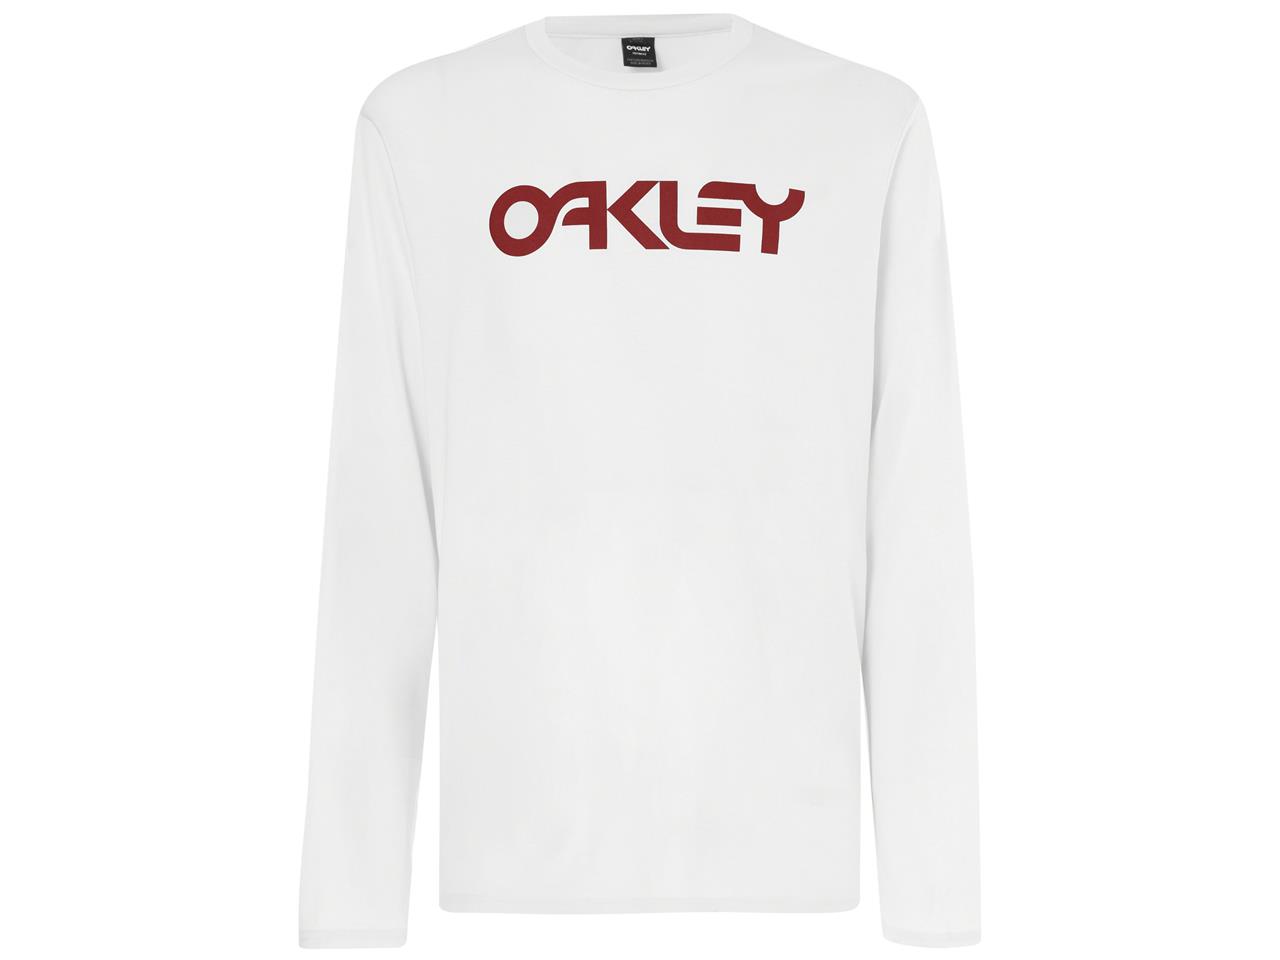 T-Shirt marque Oakley Mark II manche longue couleur blanc taille S